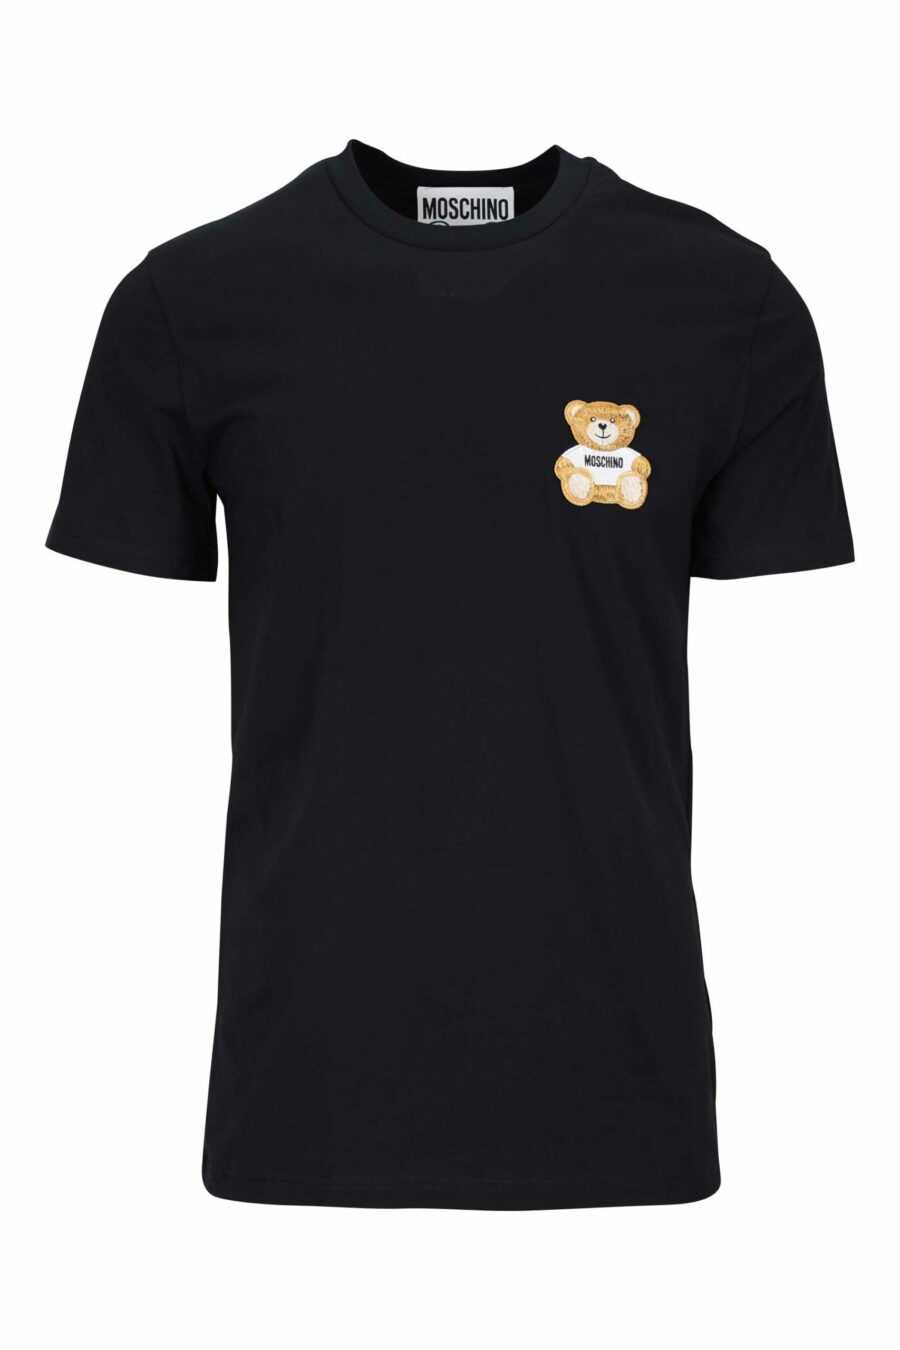 T-shirt noir avec minilogue "teddy" brodé - 667113455549 scaled